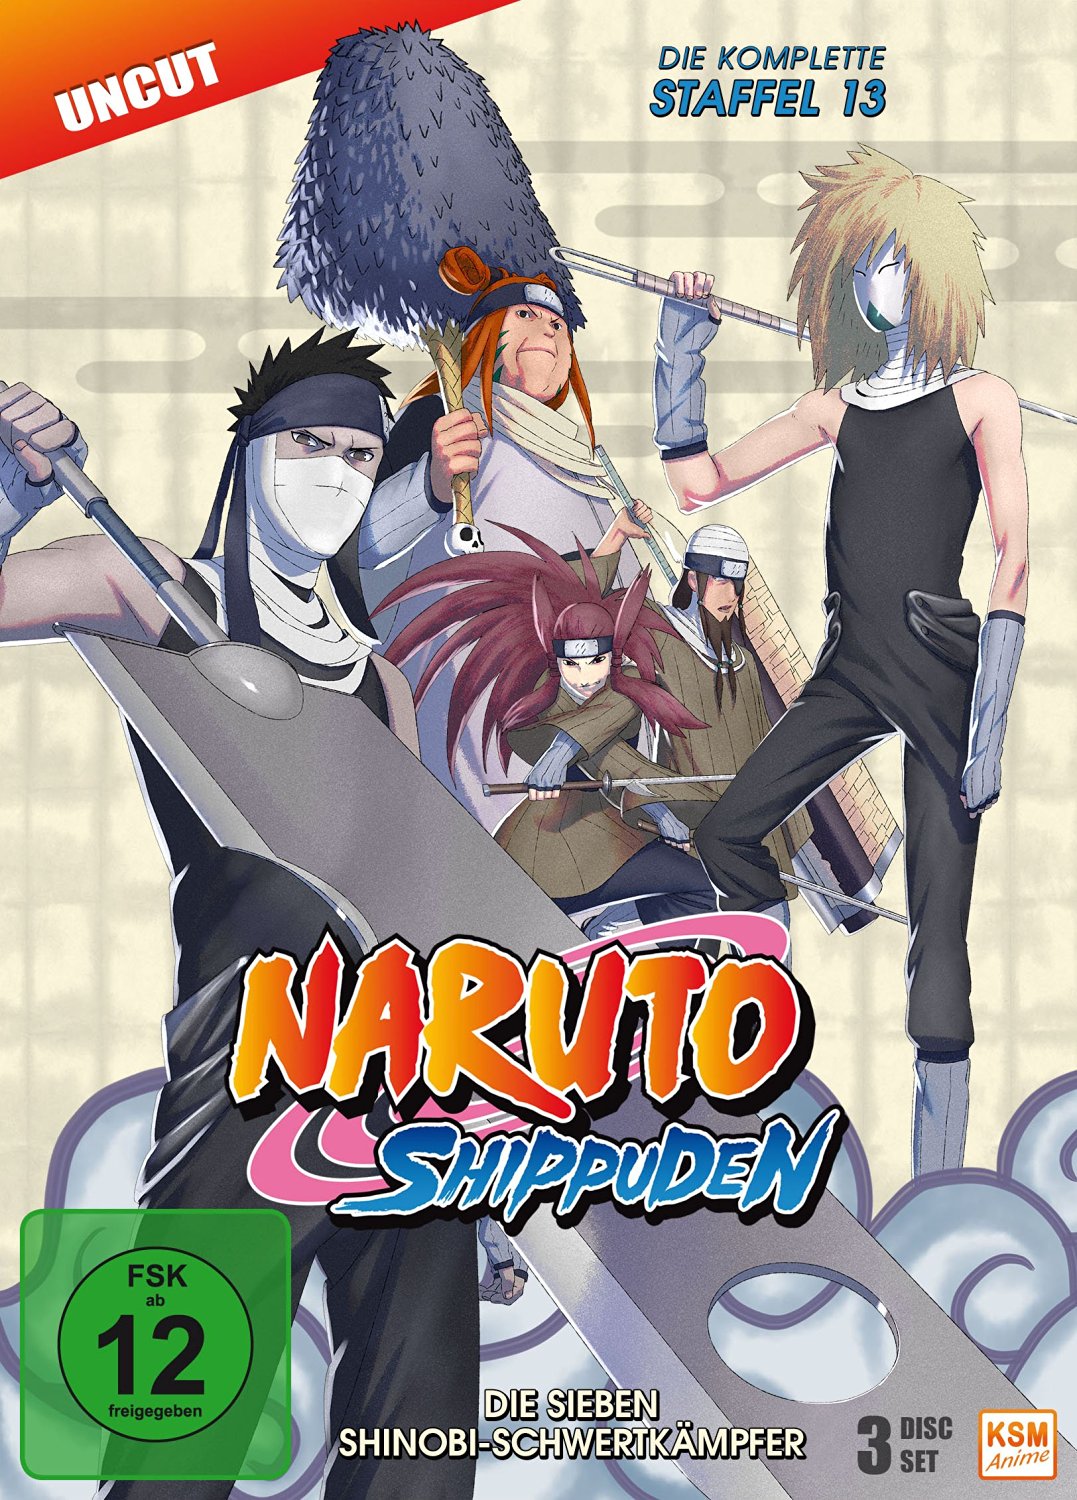 Naruto Shippuden - Staffel 13: Episode 496-509 (uncut) [DVD] Cover